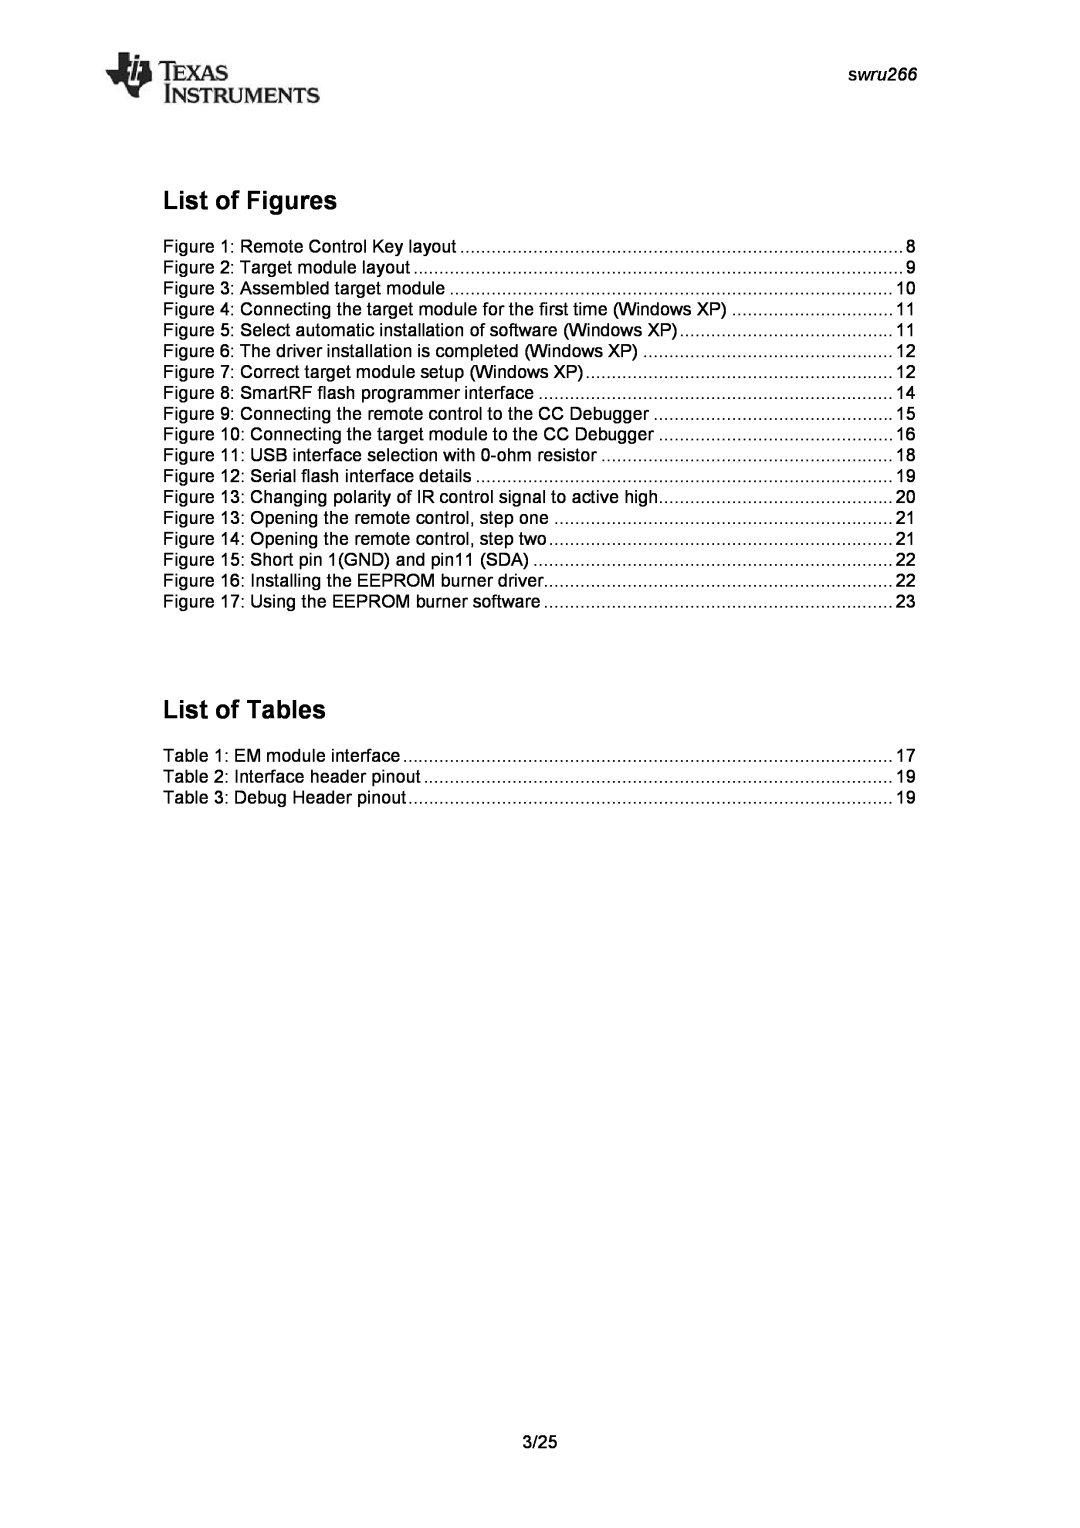 Texas Instruments CC2533 manual List of Figures, List of Tables, swru266 